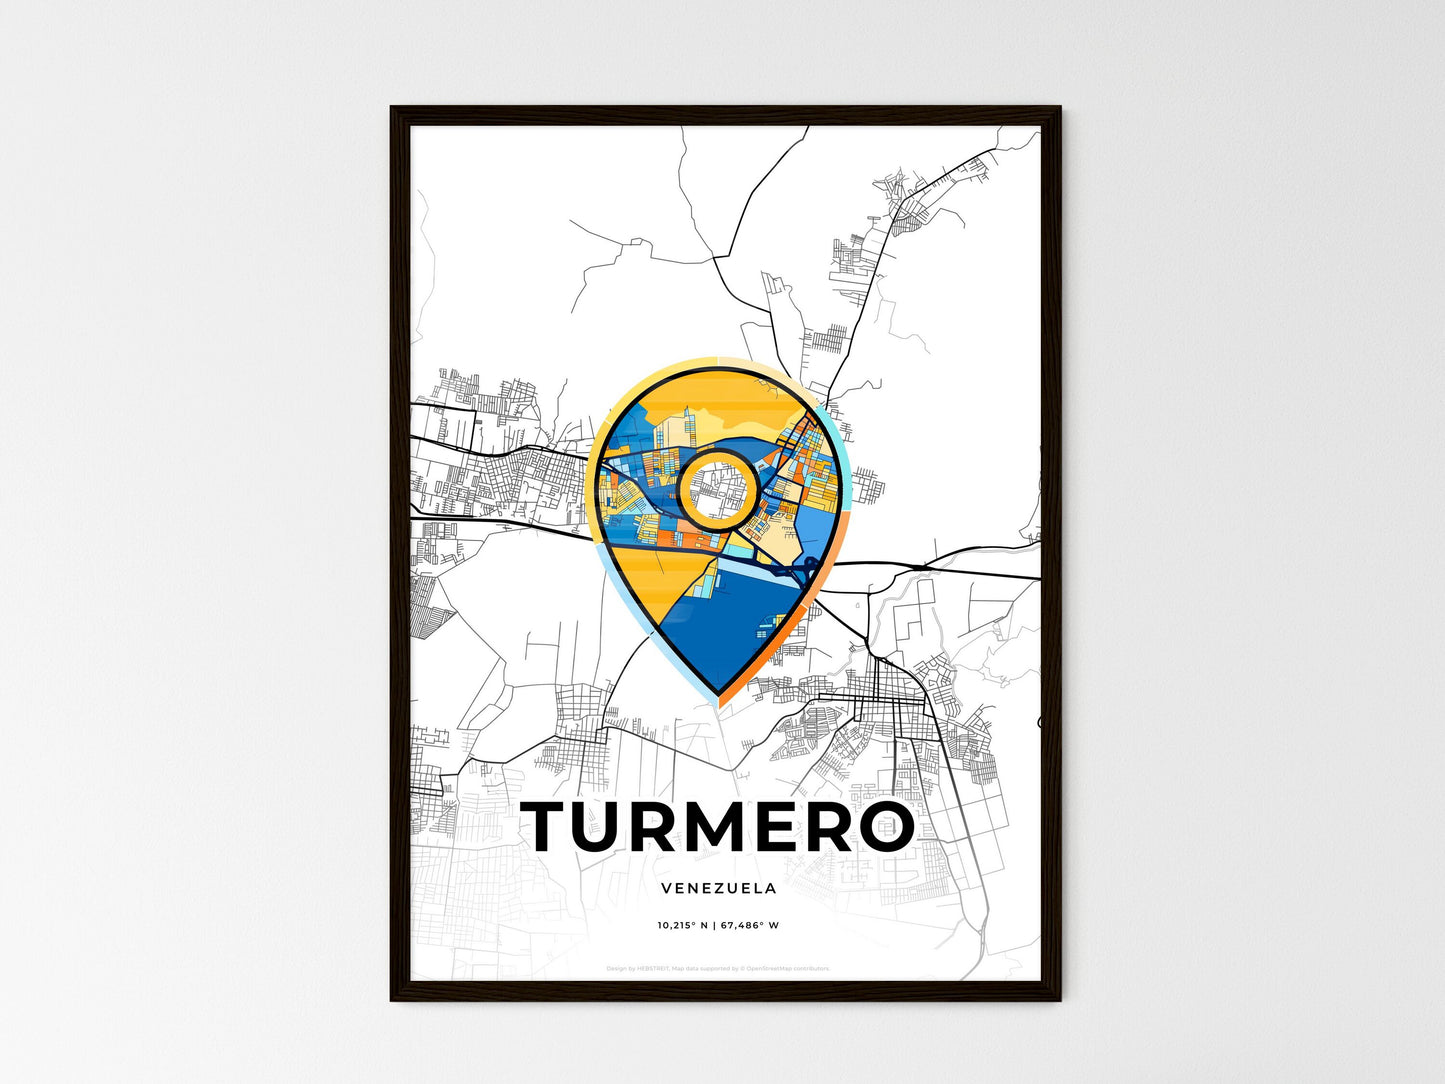 TURMERO VENEZUELA minimal art map with a colorful icon. Style 1